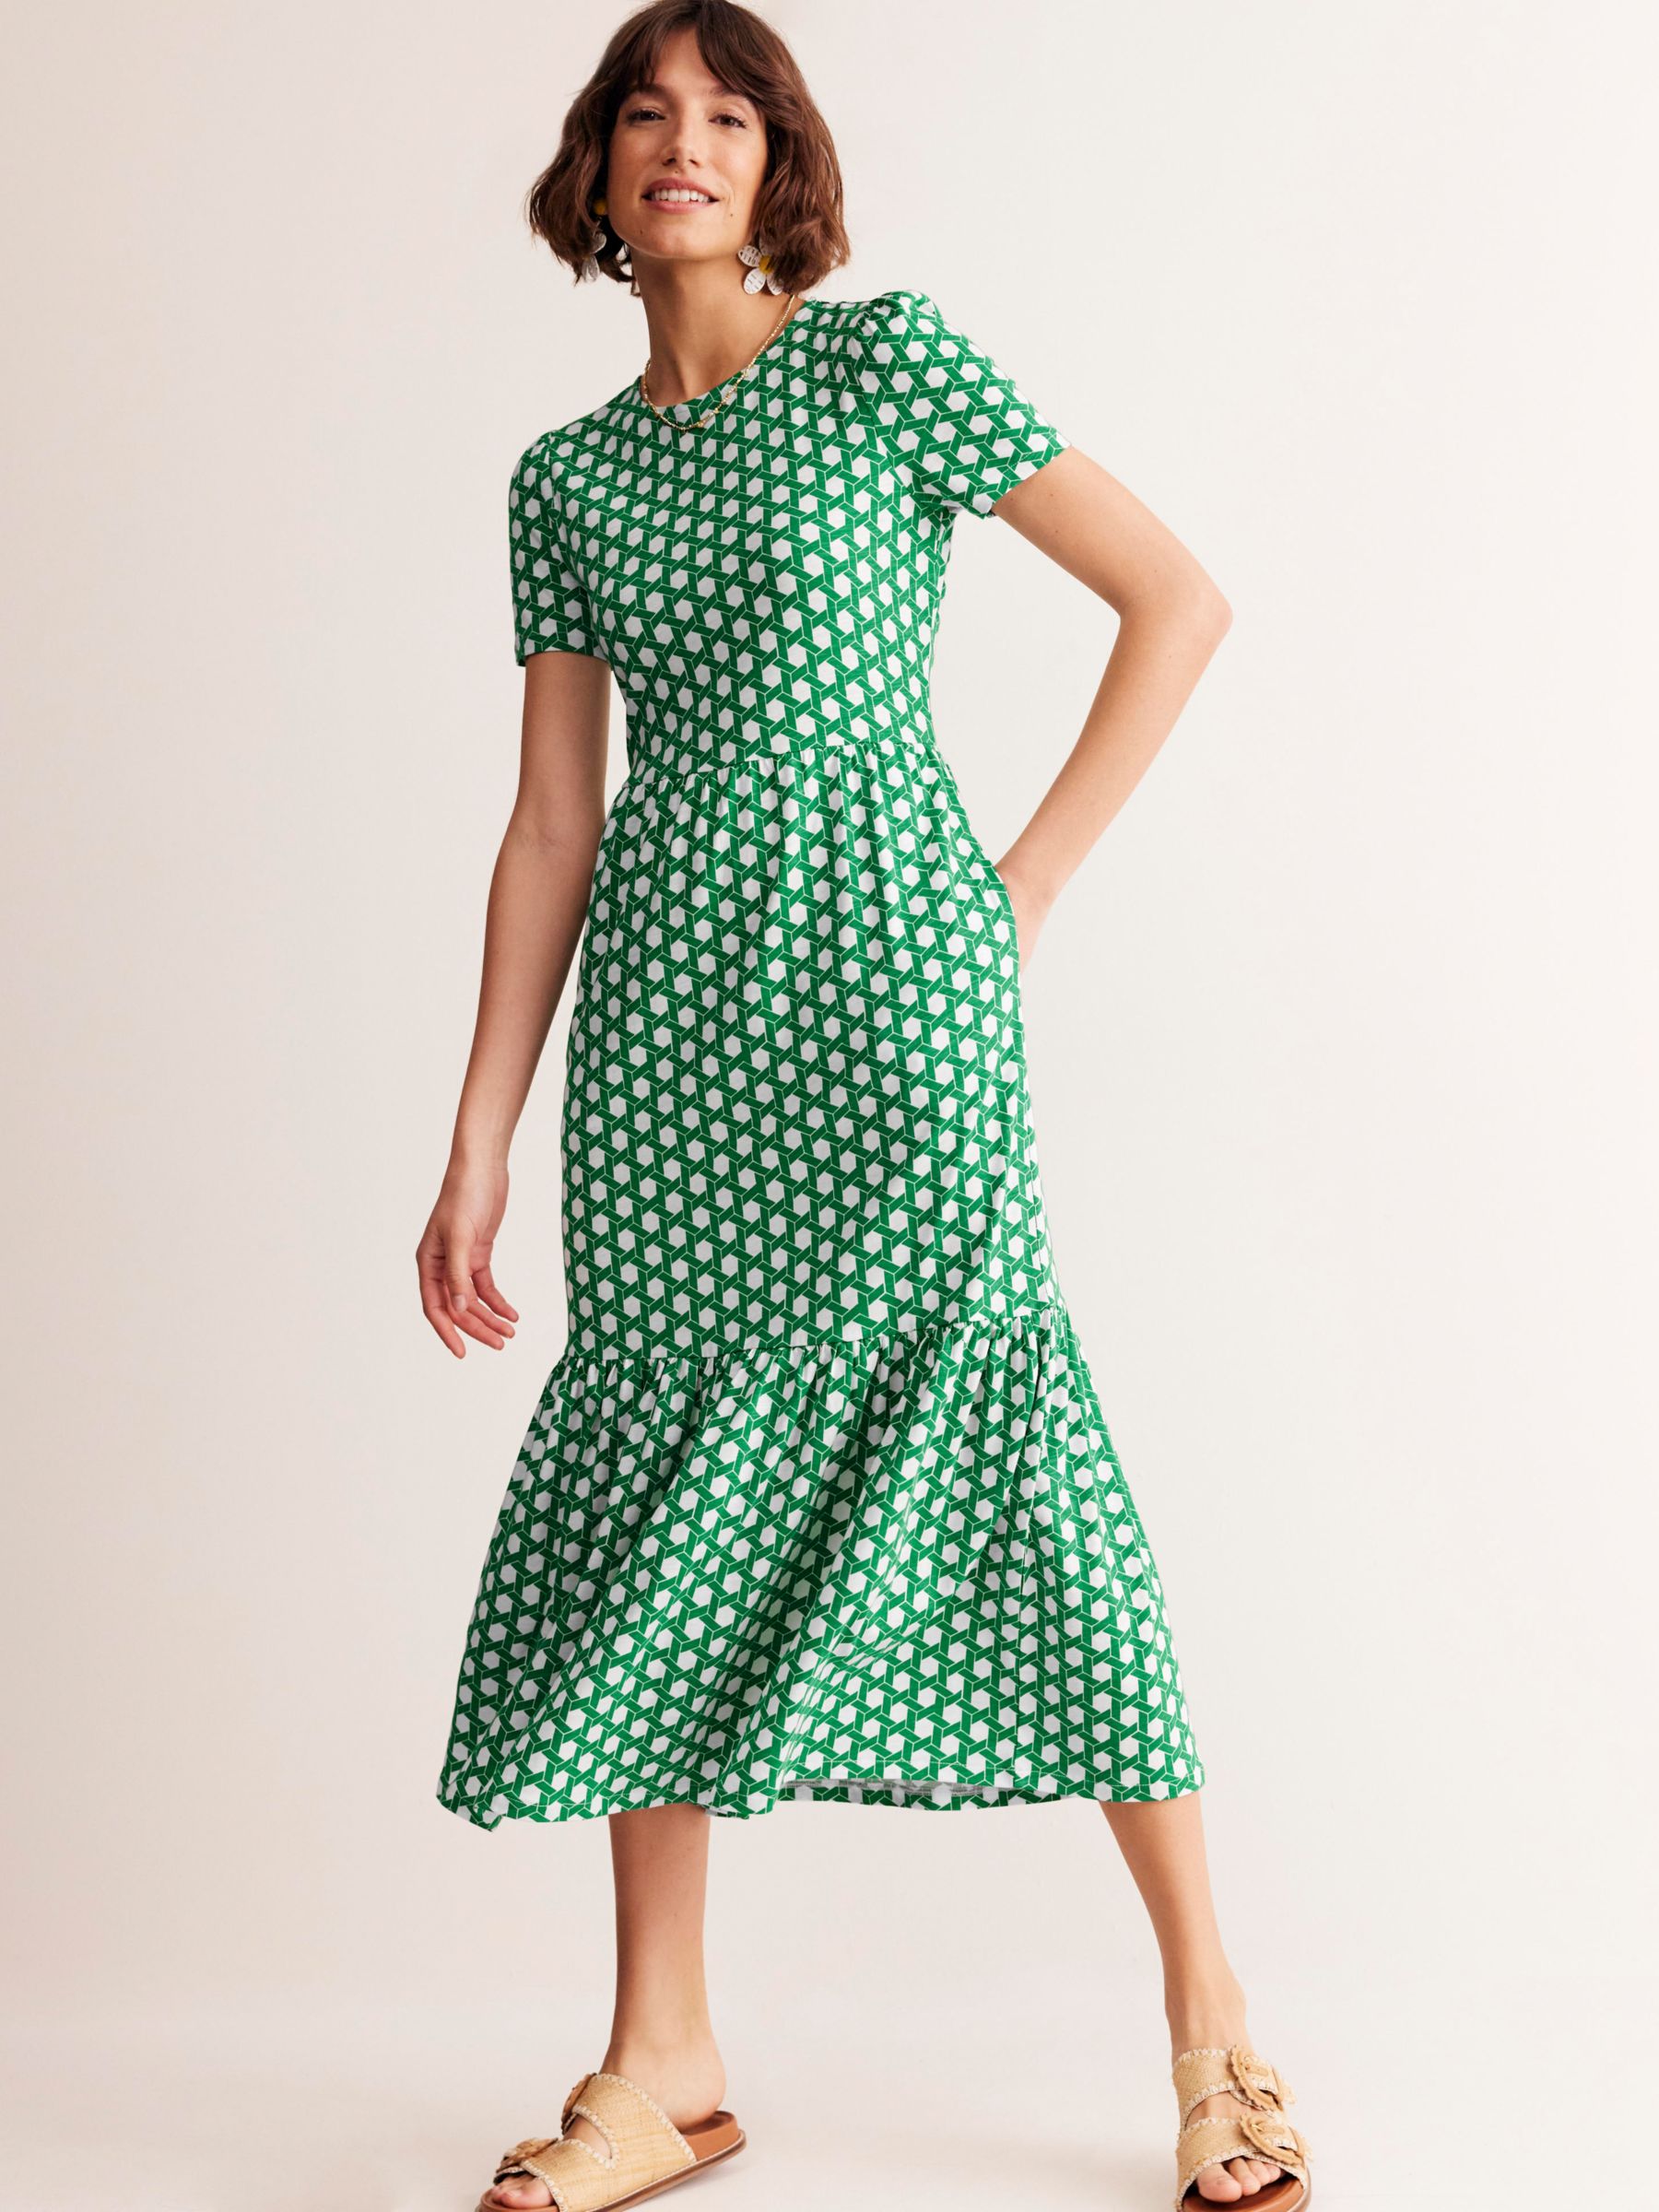 Boden Emma Honeycomb Geometric Tiered Jersey Dress, Green, 8